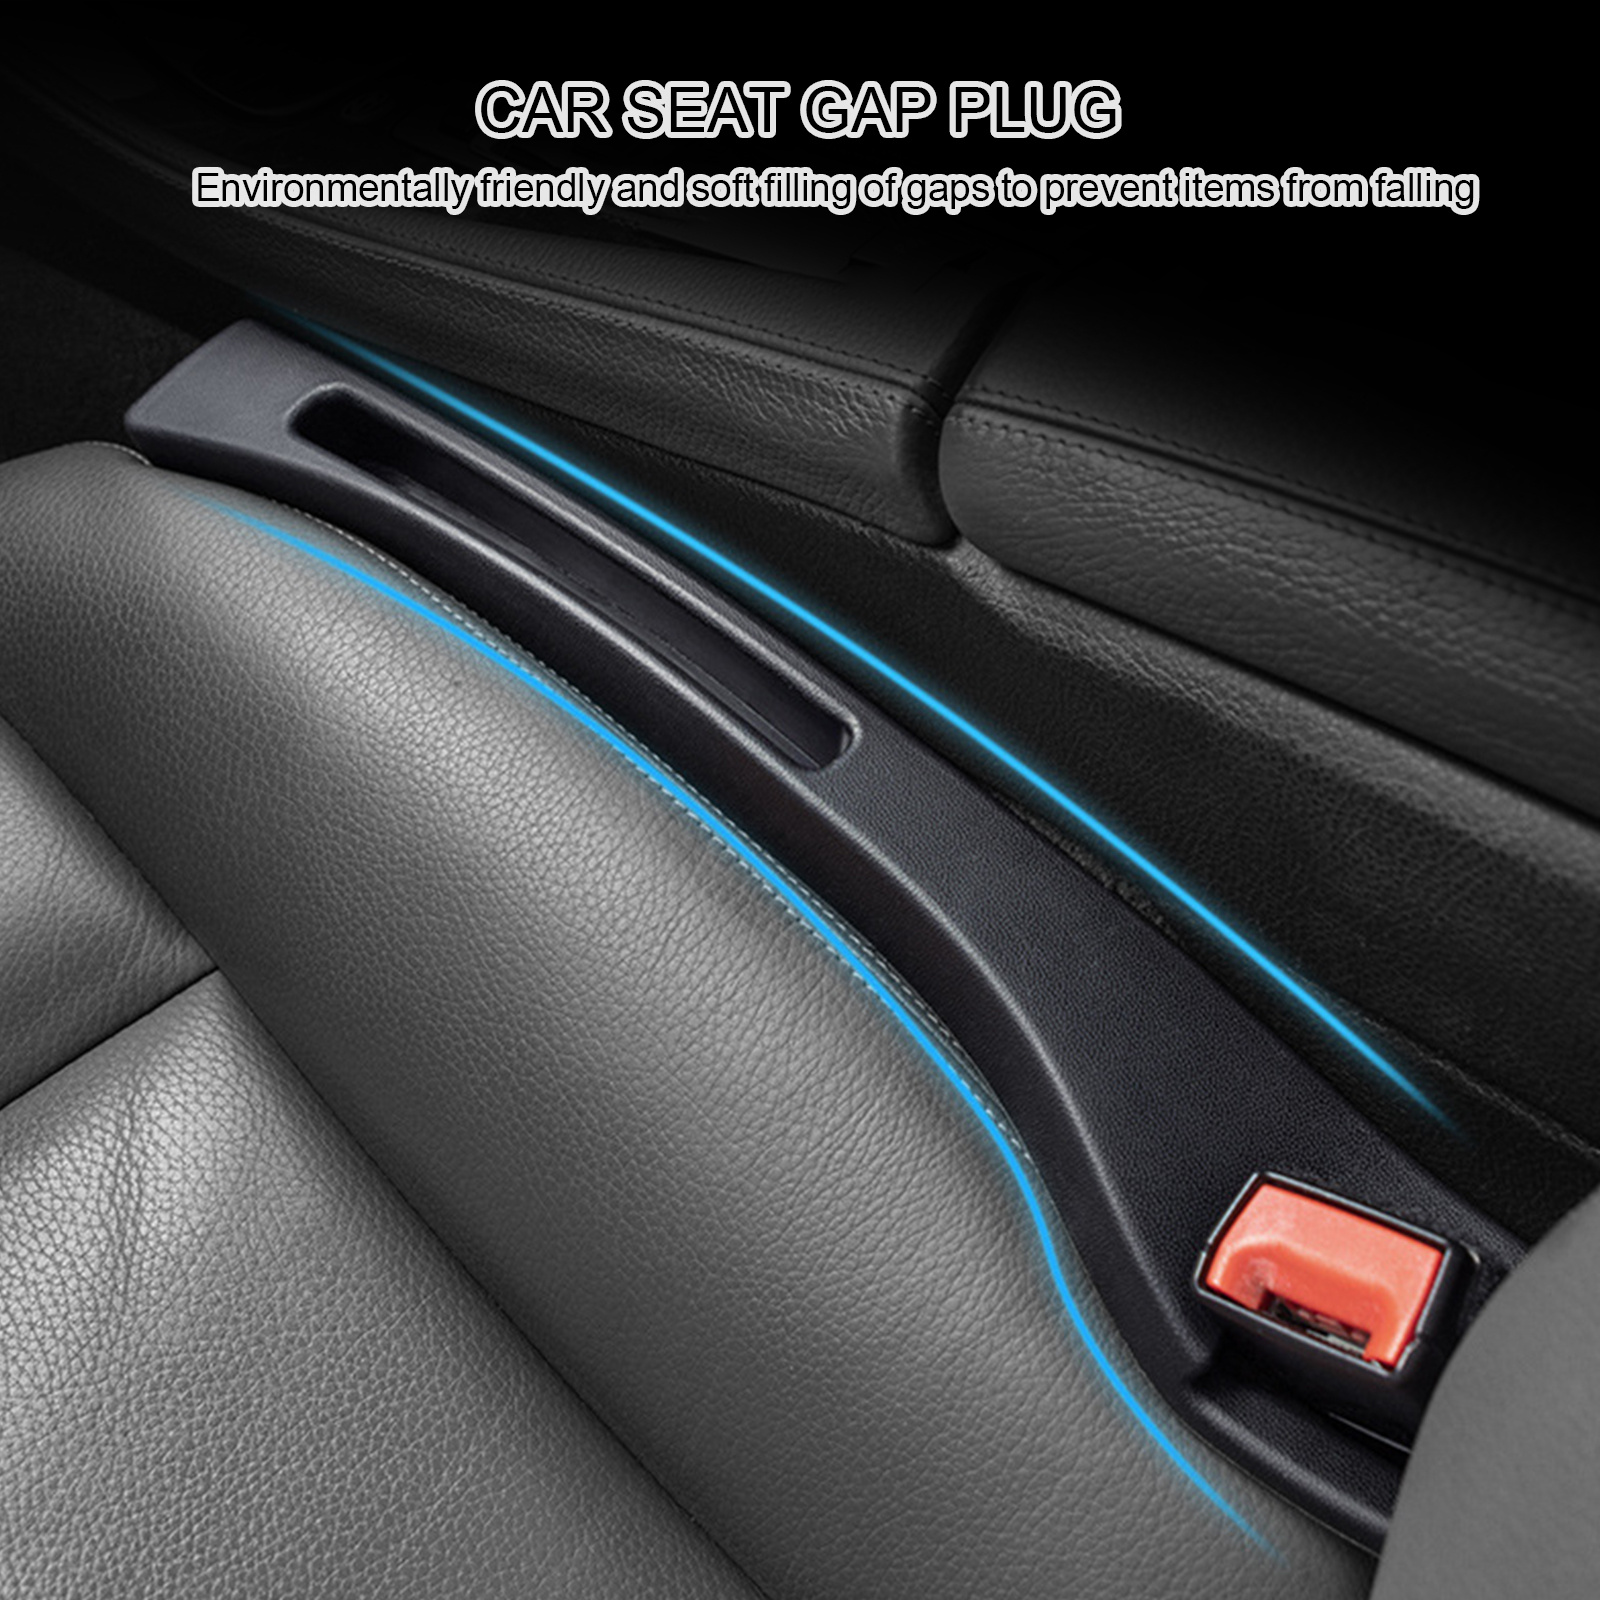 2PCS Car Seat Gap Filler Side Seam Plug Phone With Phone Card Pocket  Leak-proof Filling Strip Universal Interior Accessories